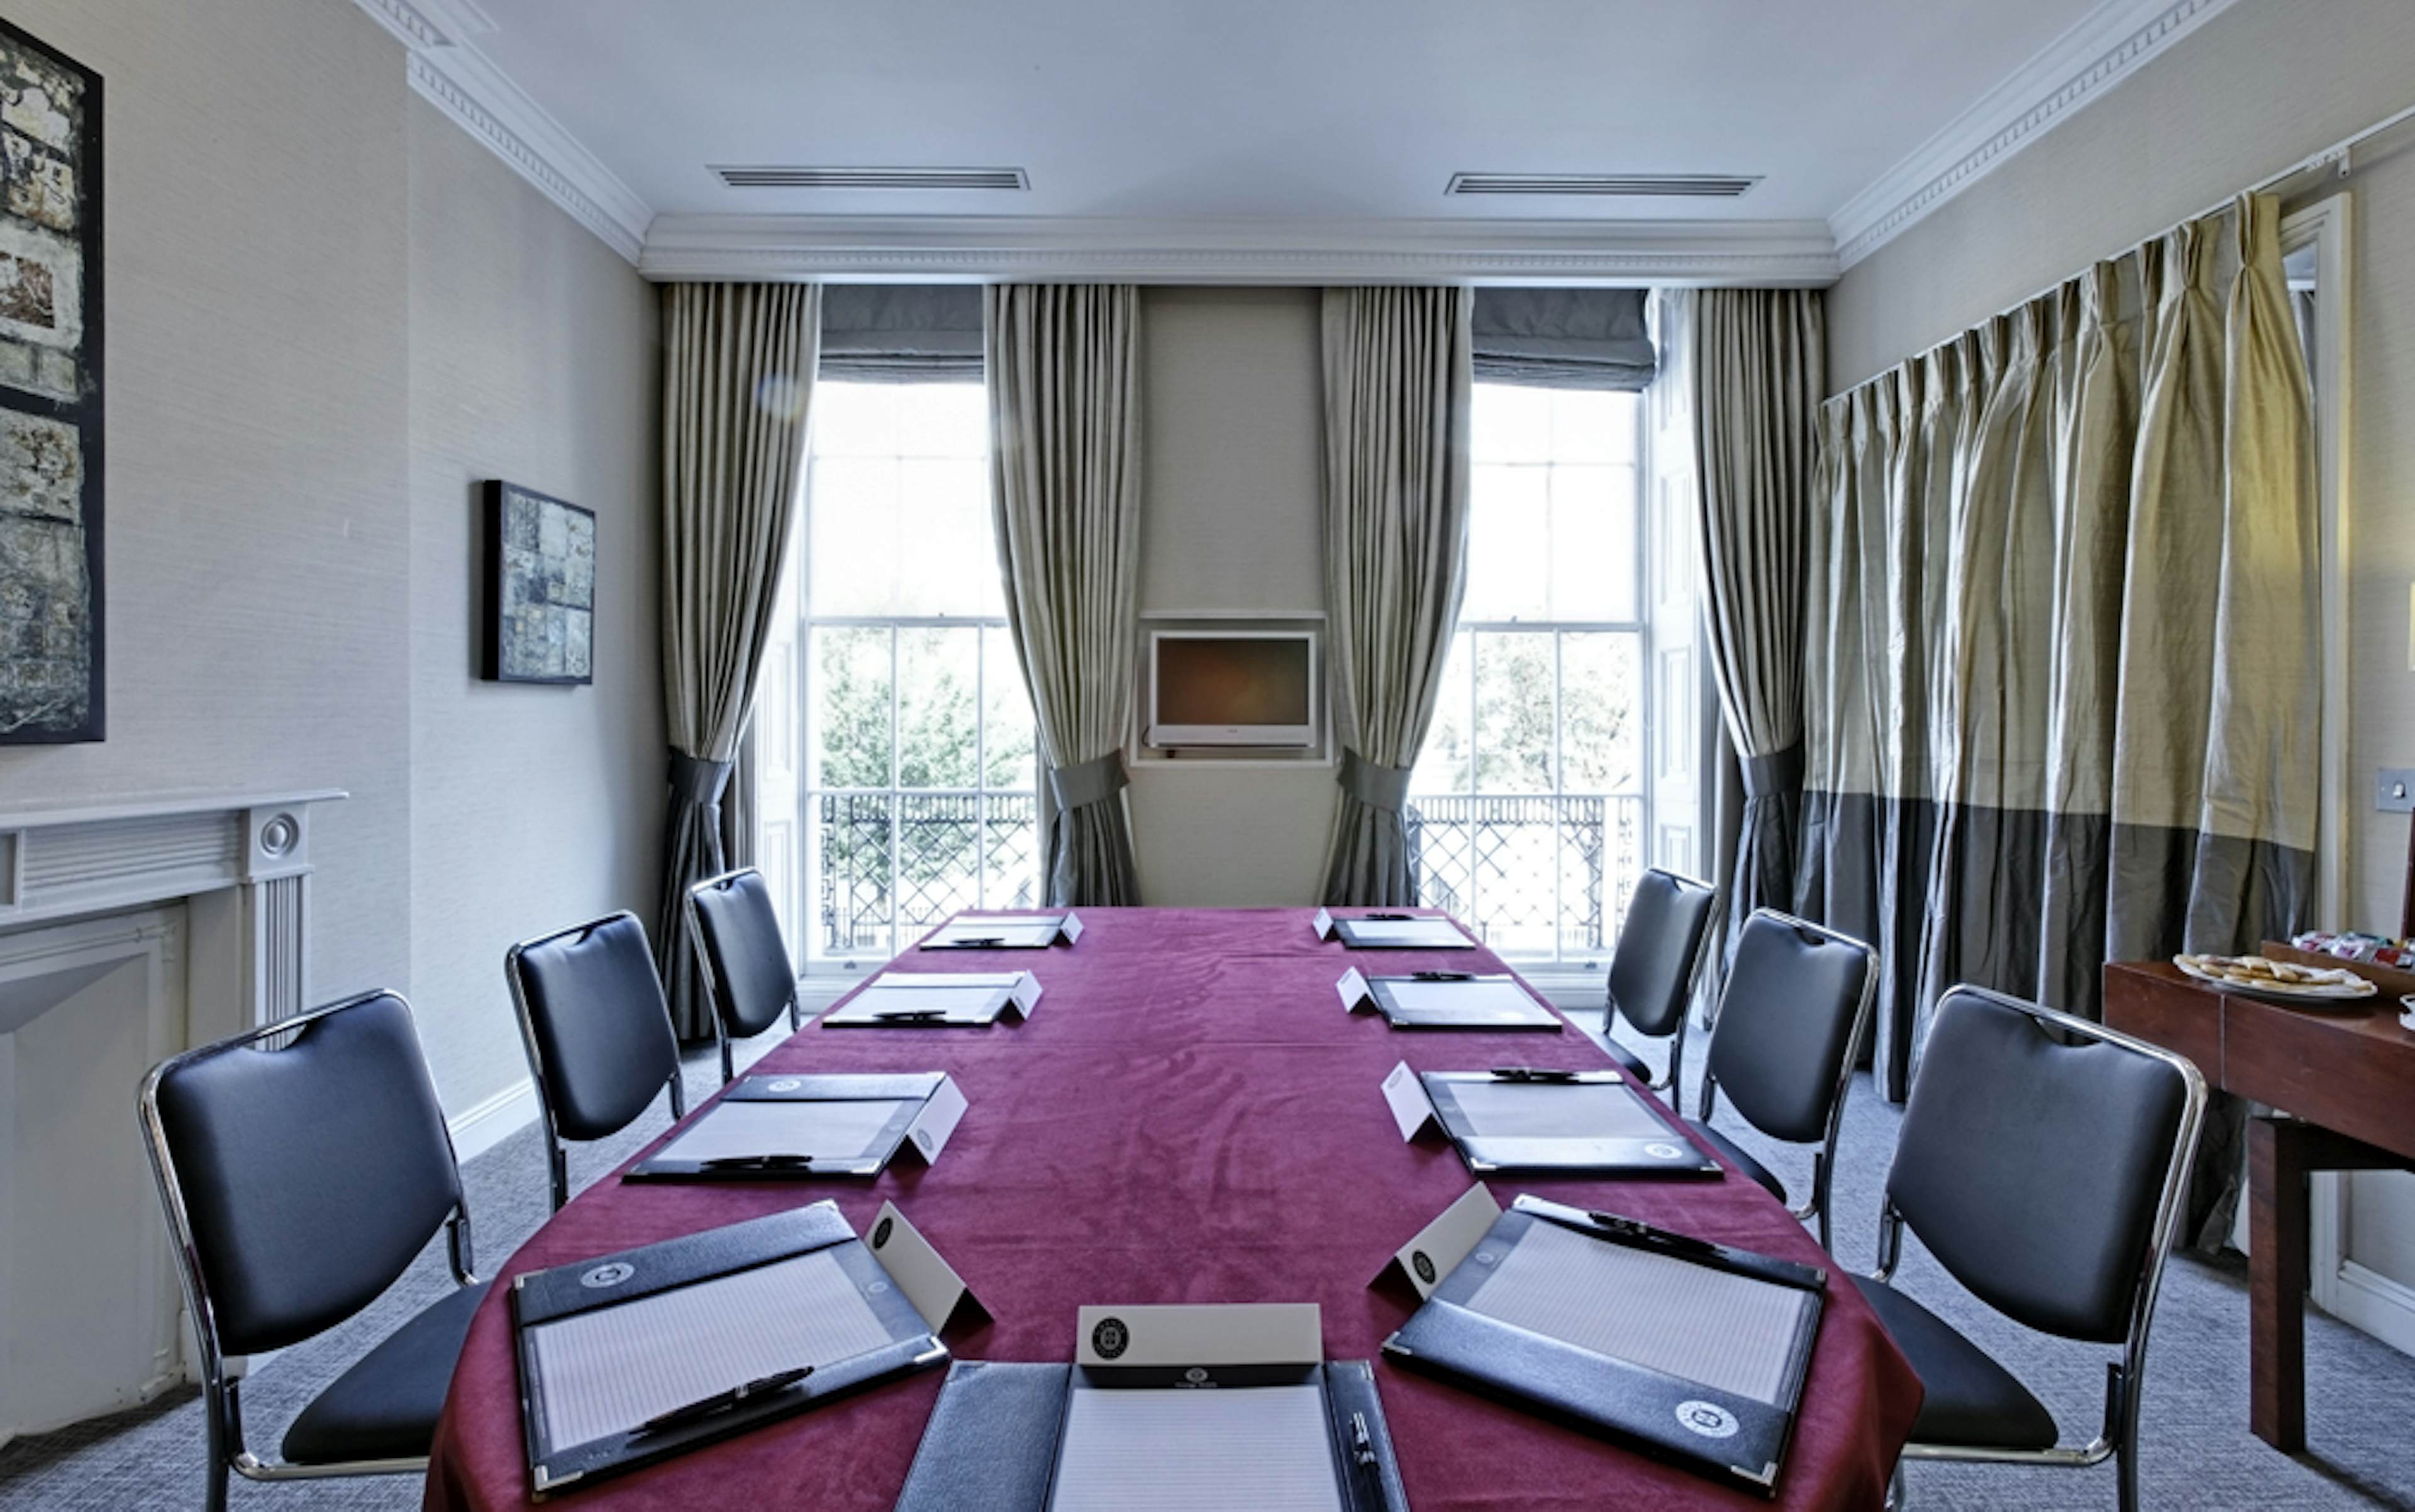 Grange Beauchamp Hotel - Syndicate Room 1-4 image 1